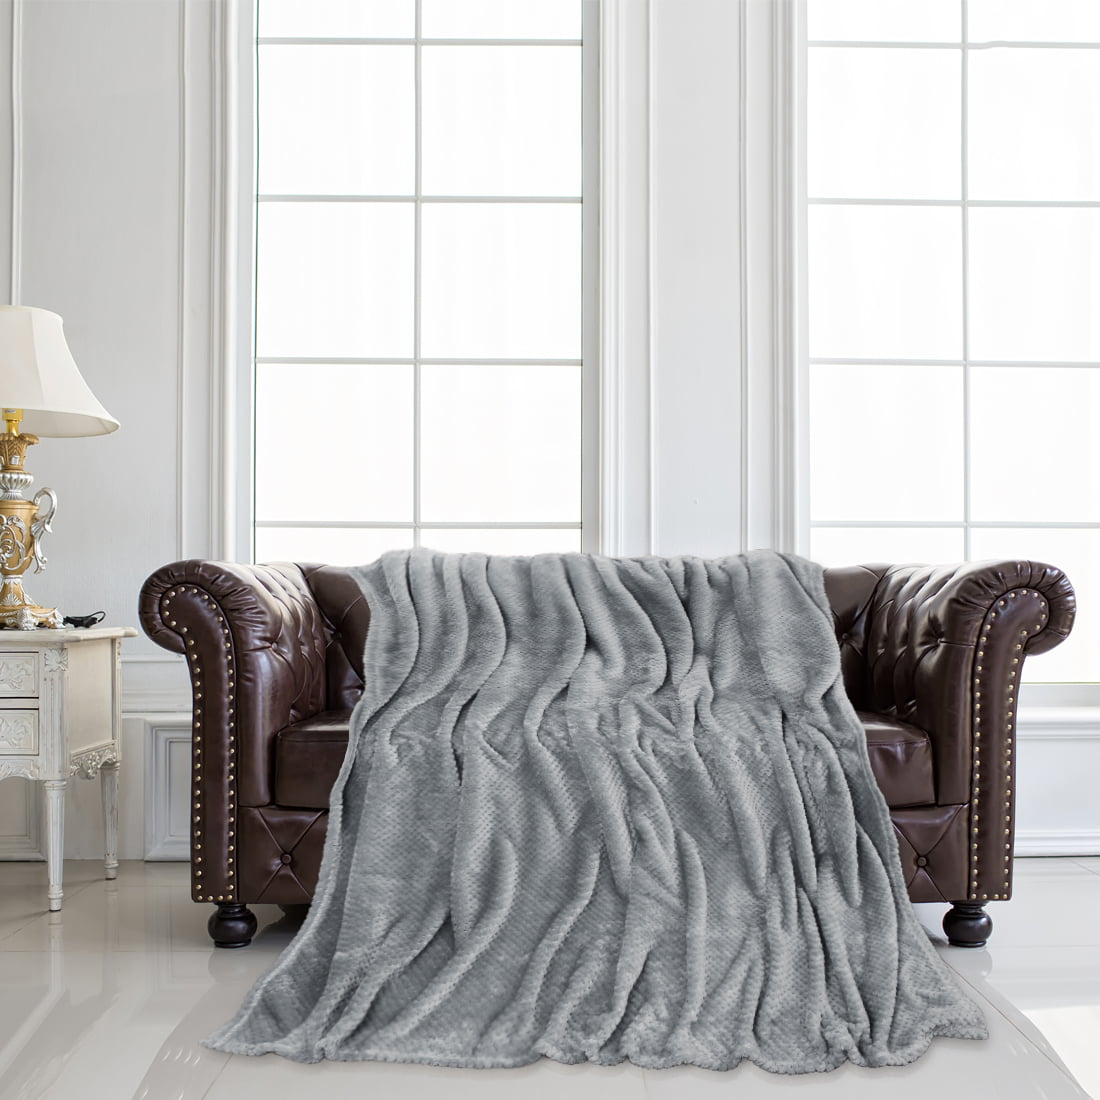 Details about   New Premium Eco-friendly Microfibre Fleece Queen Size Blanket Light Grey 